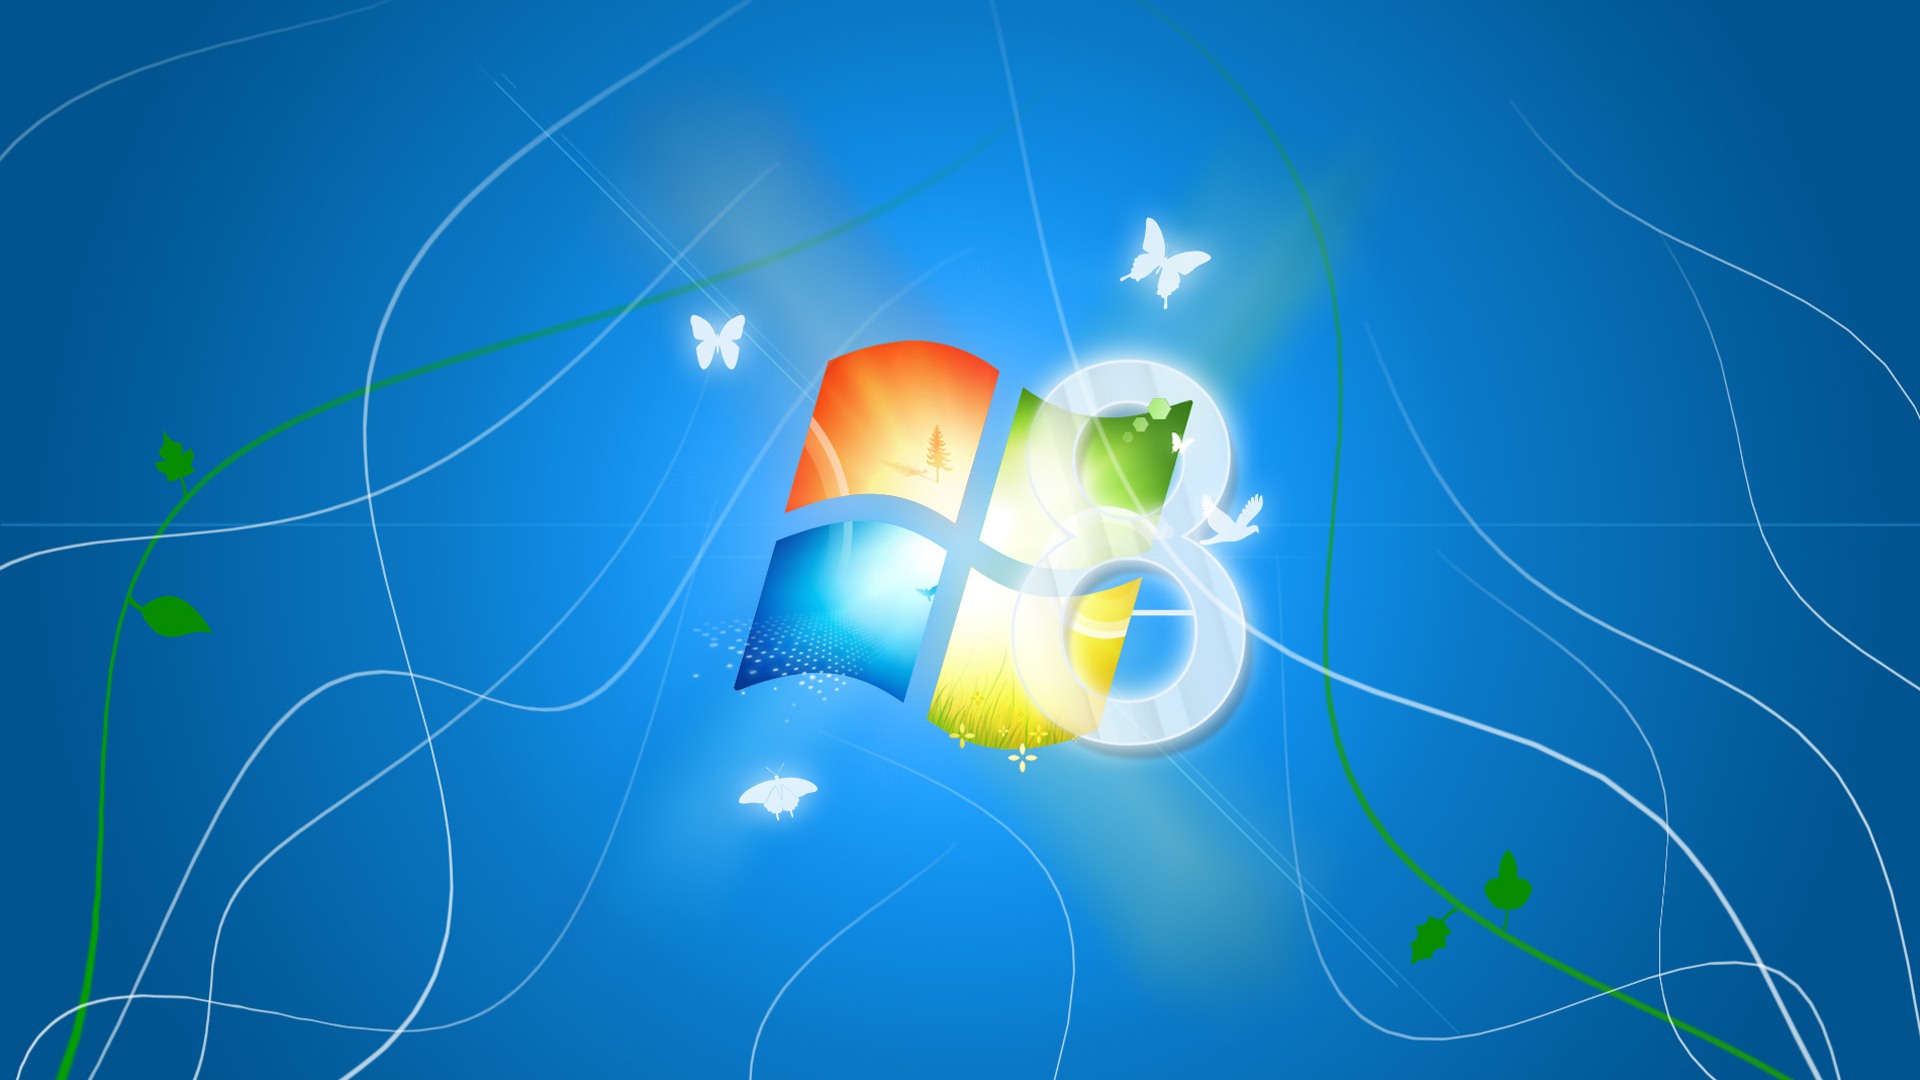 Windows 8 主题壁纸 (二)5 - 1920x1080